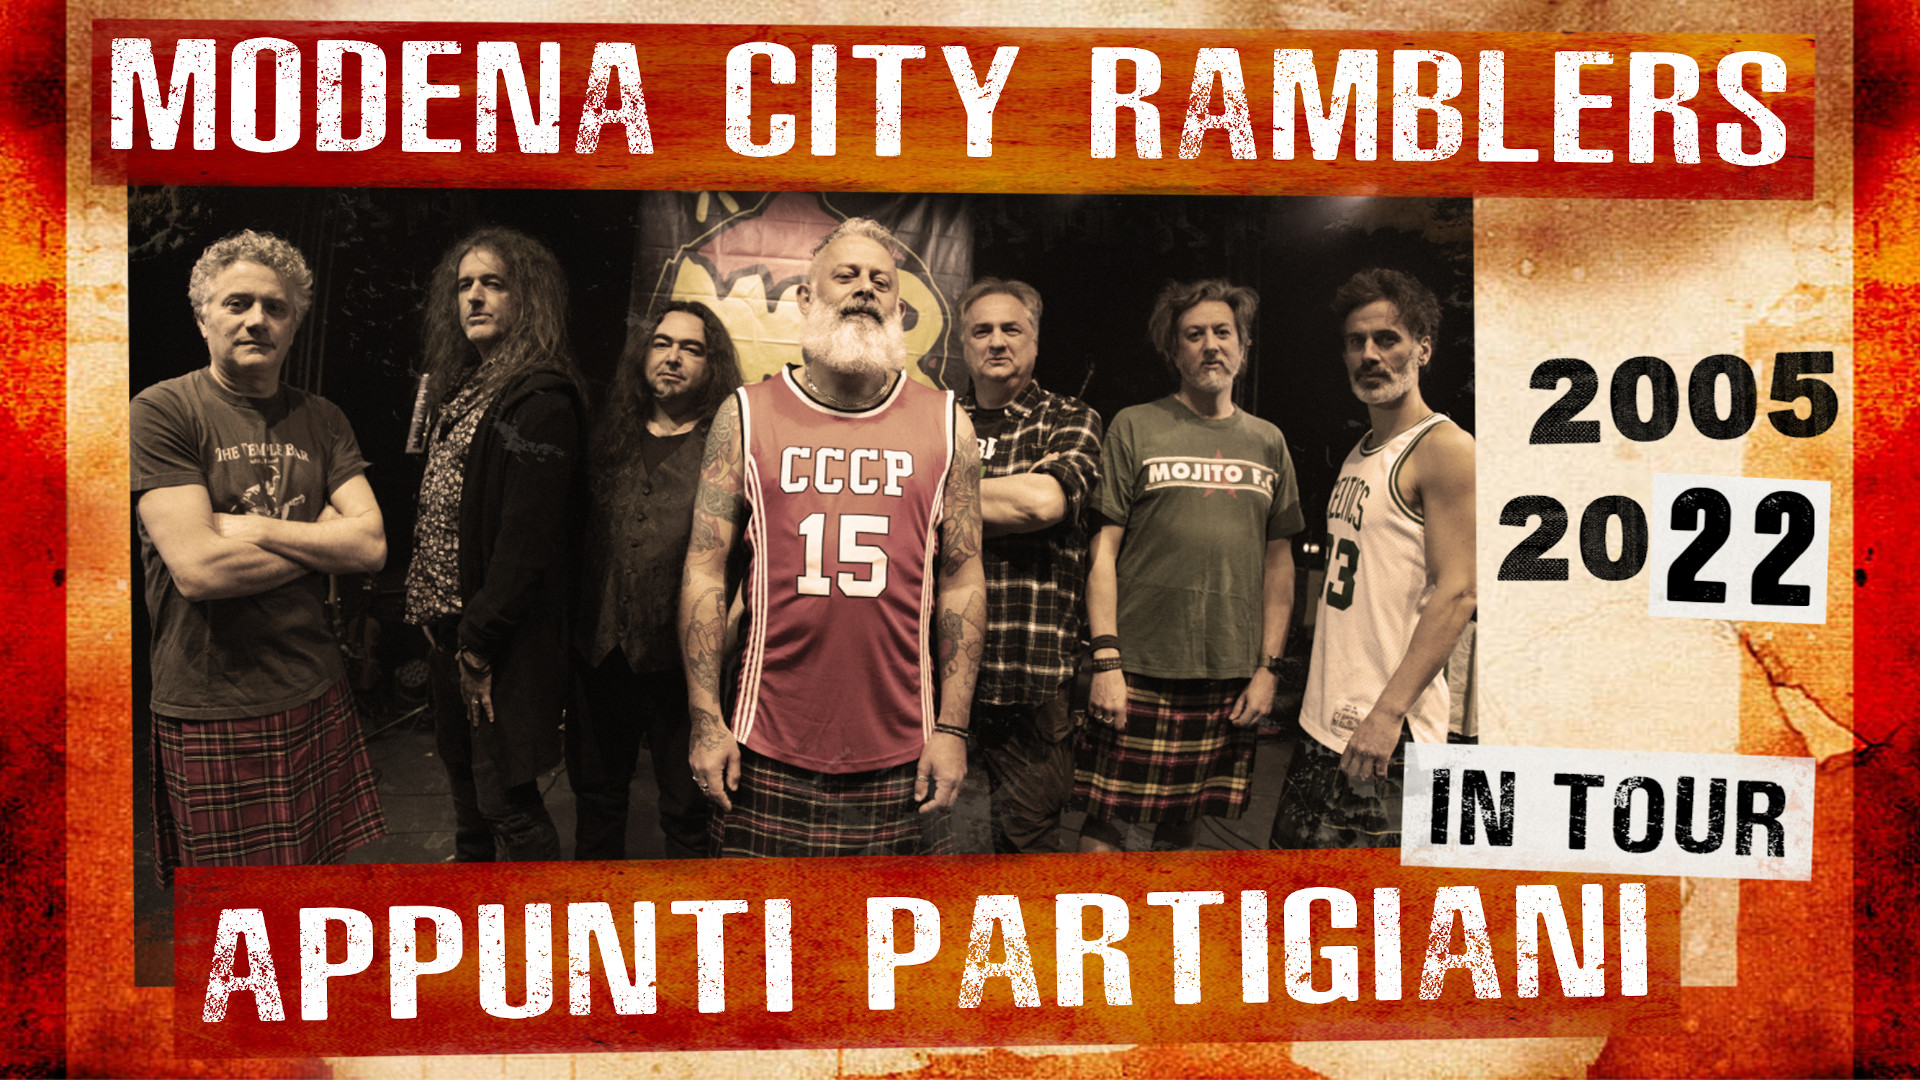 Modena City Ramblers in concerto